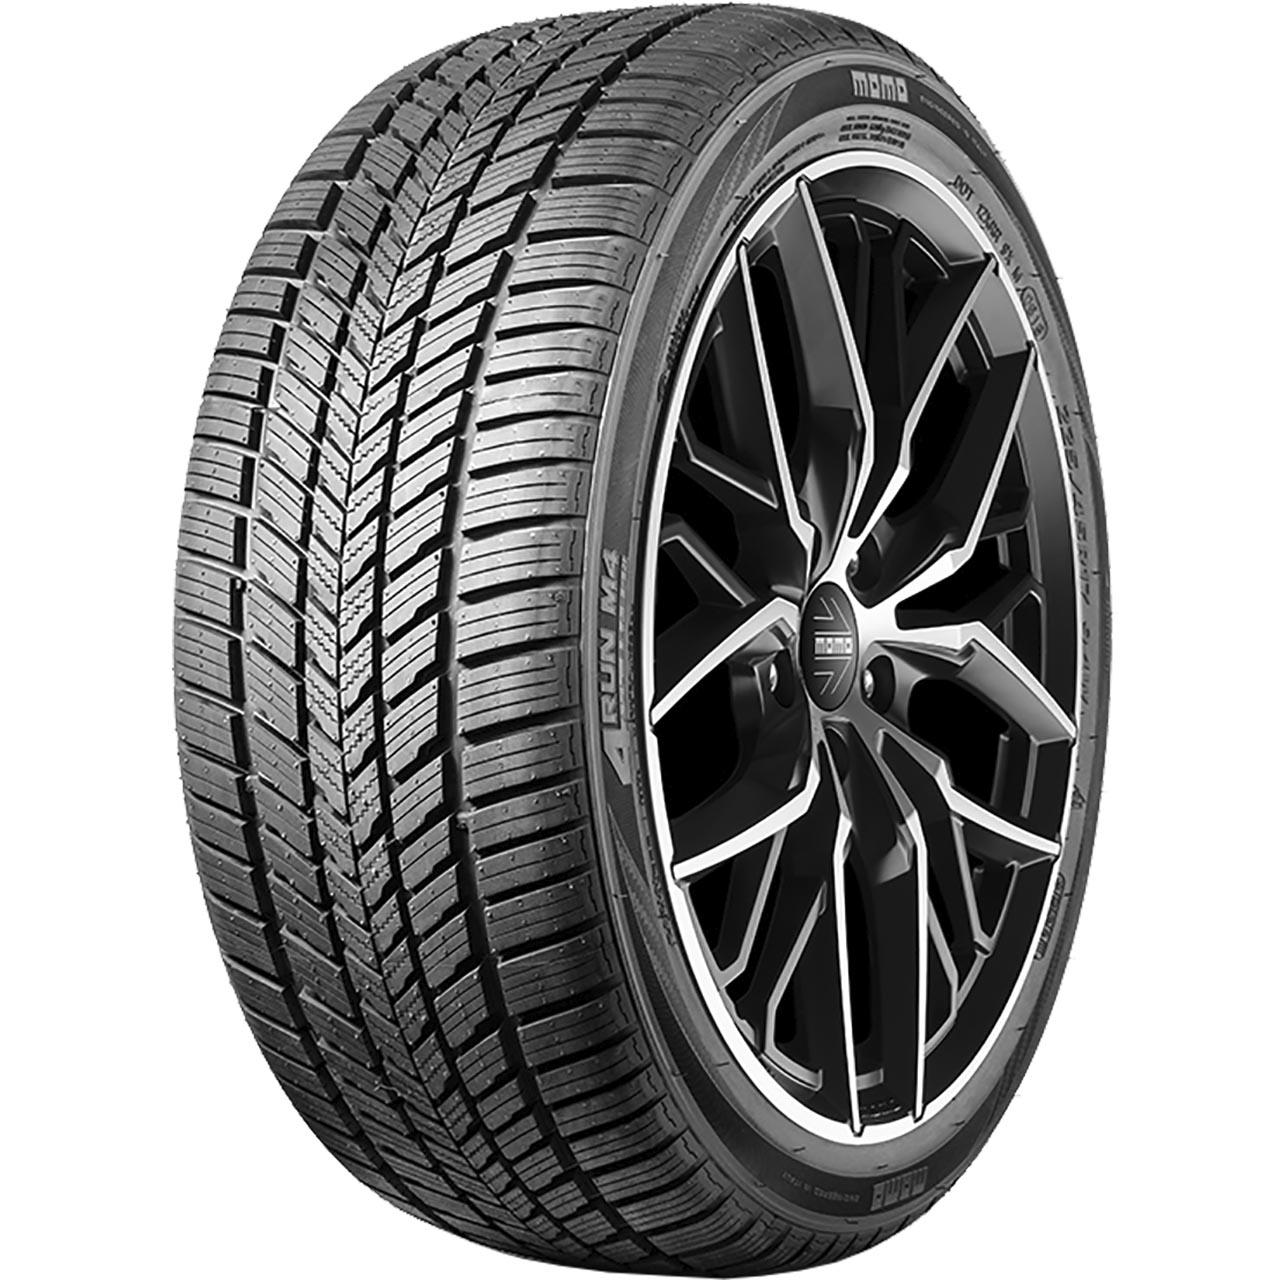 Momo Tire M 4 Four Season 165/70R14 85T XL